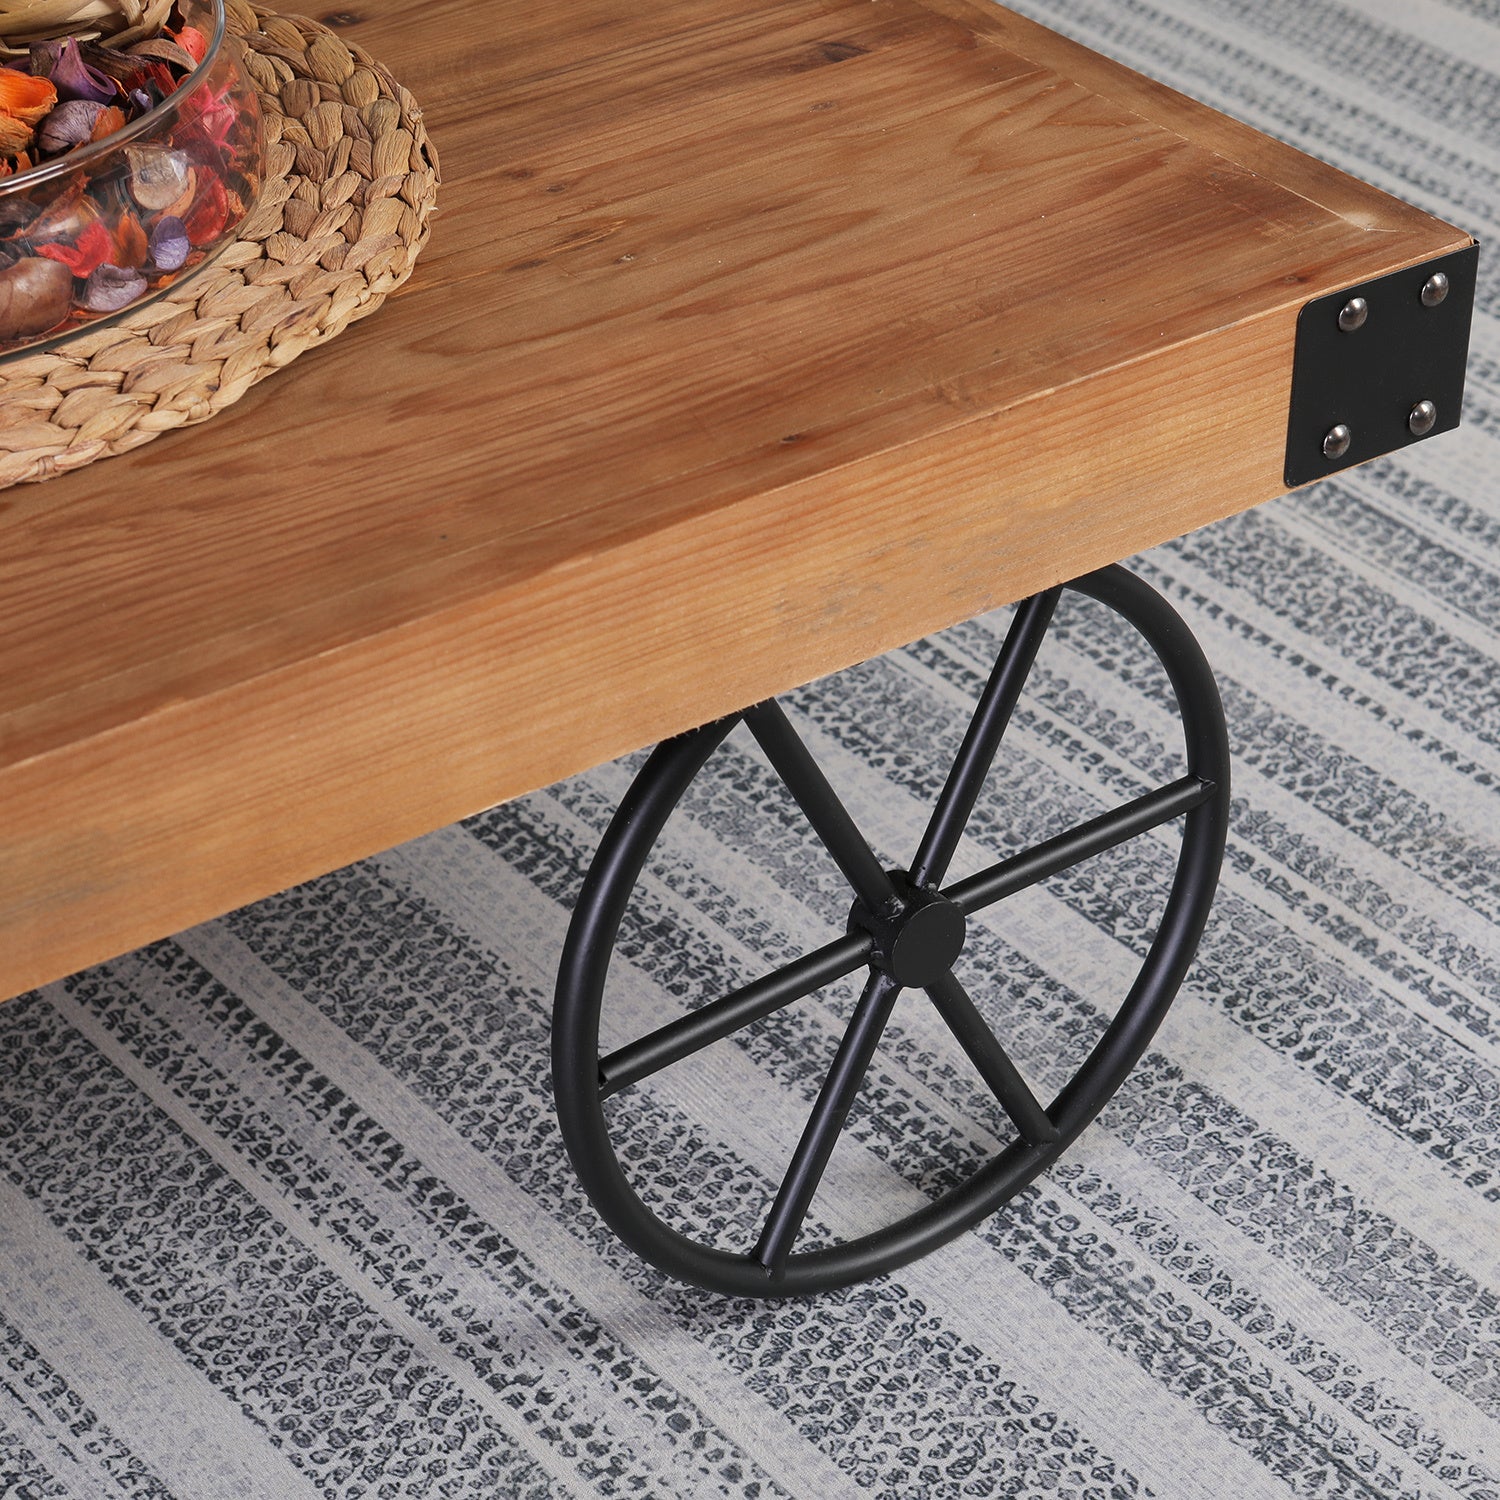 MFSTUDIO Rustic Coffee Table with Metal Wheels for Living Room Bed Room